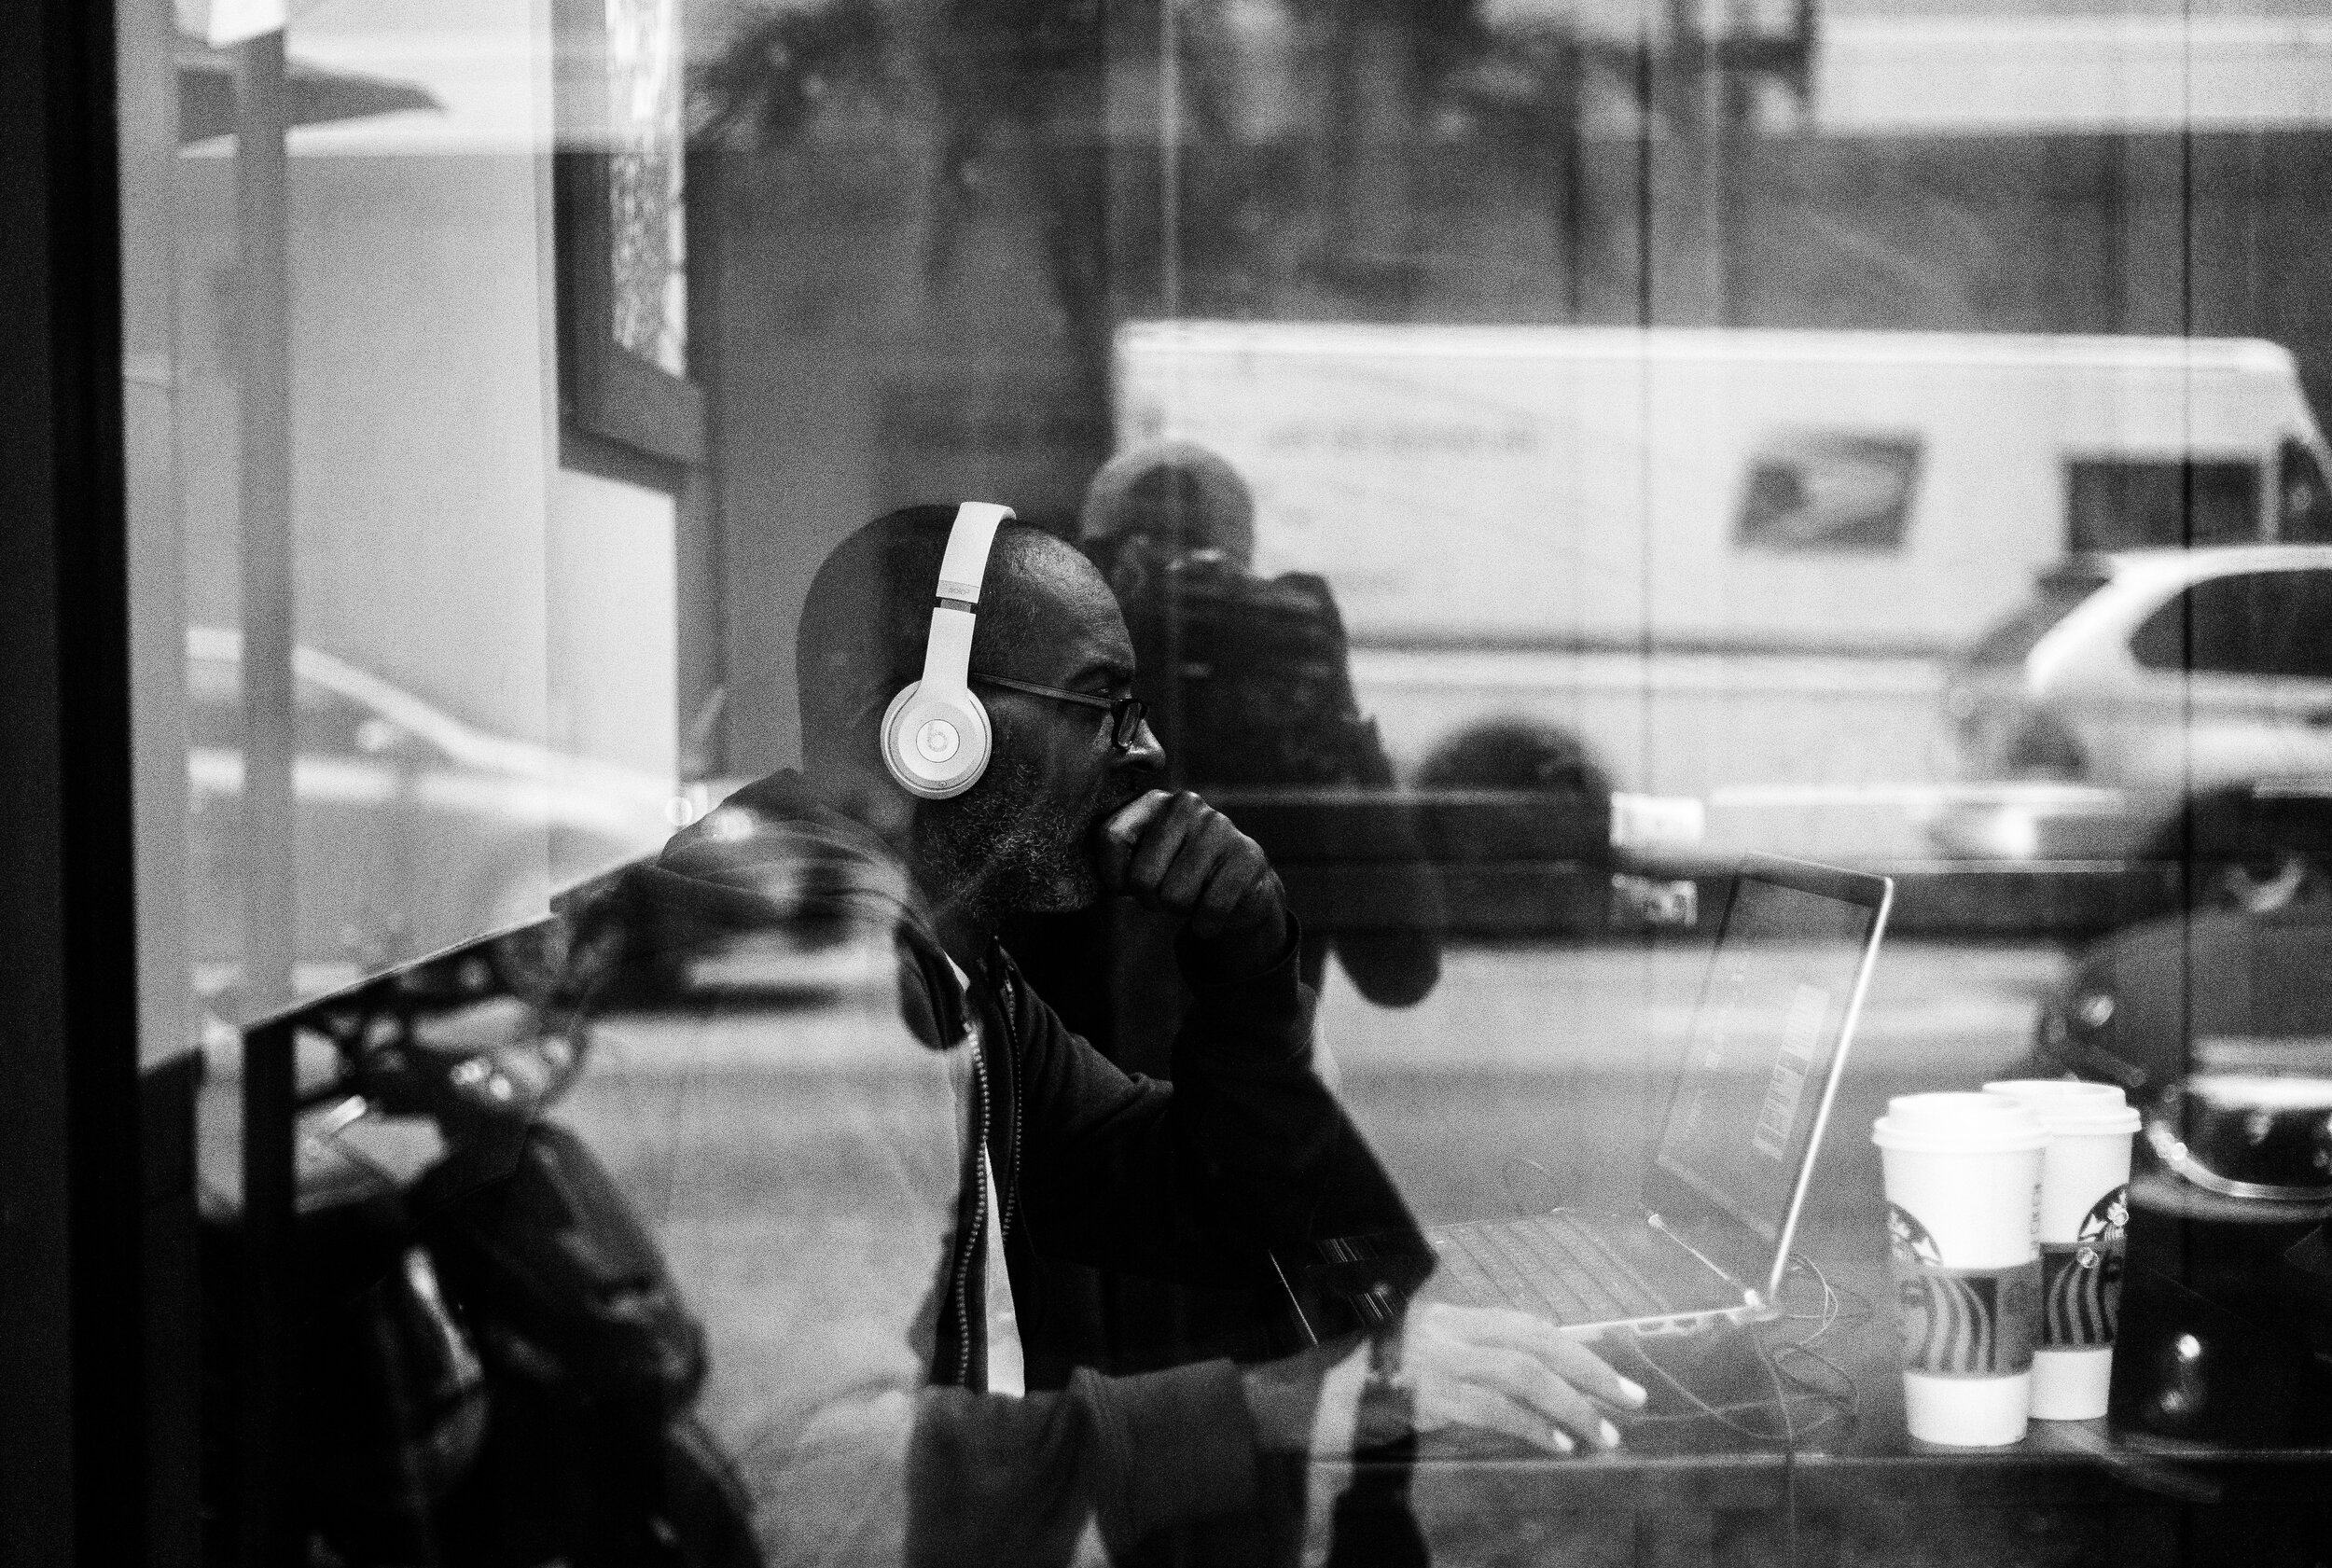 Man with Beats_Starbucks window-.jpg